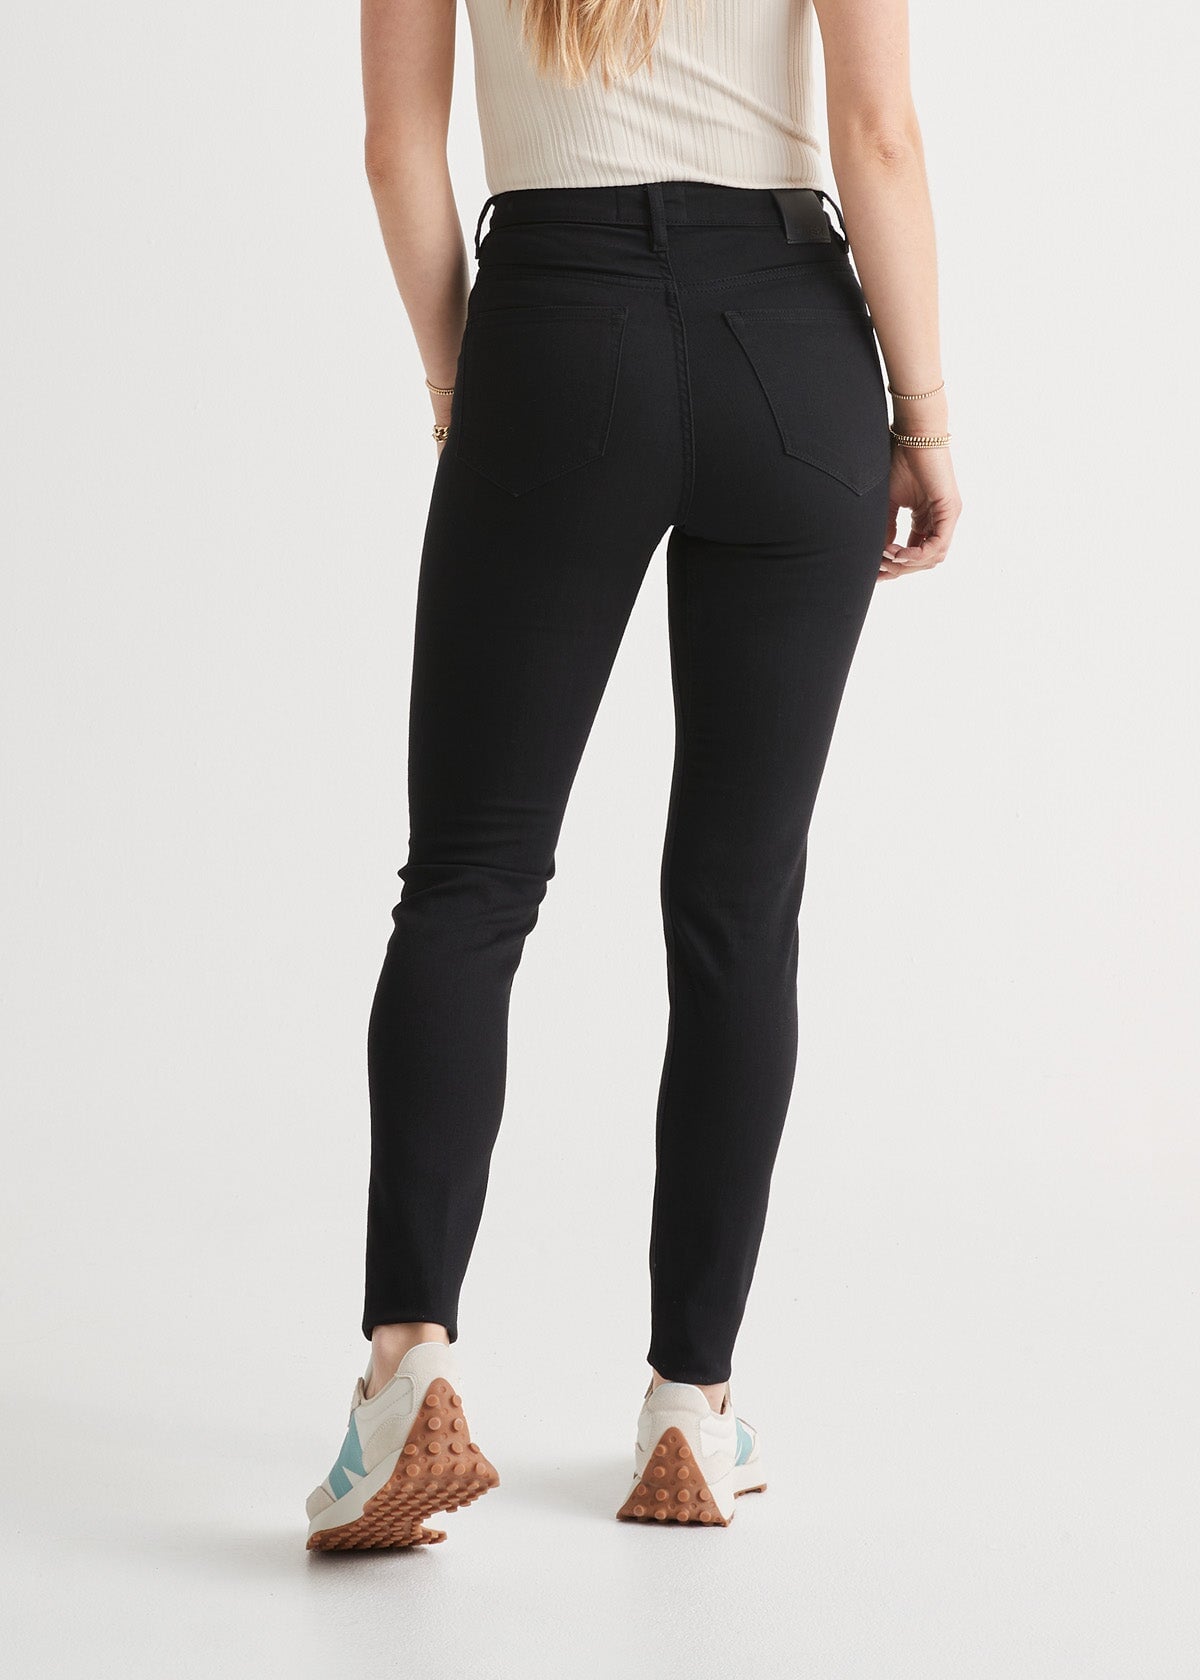 Women's High Rise Stretch Denim Black Skinny Jean